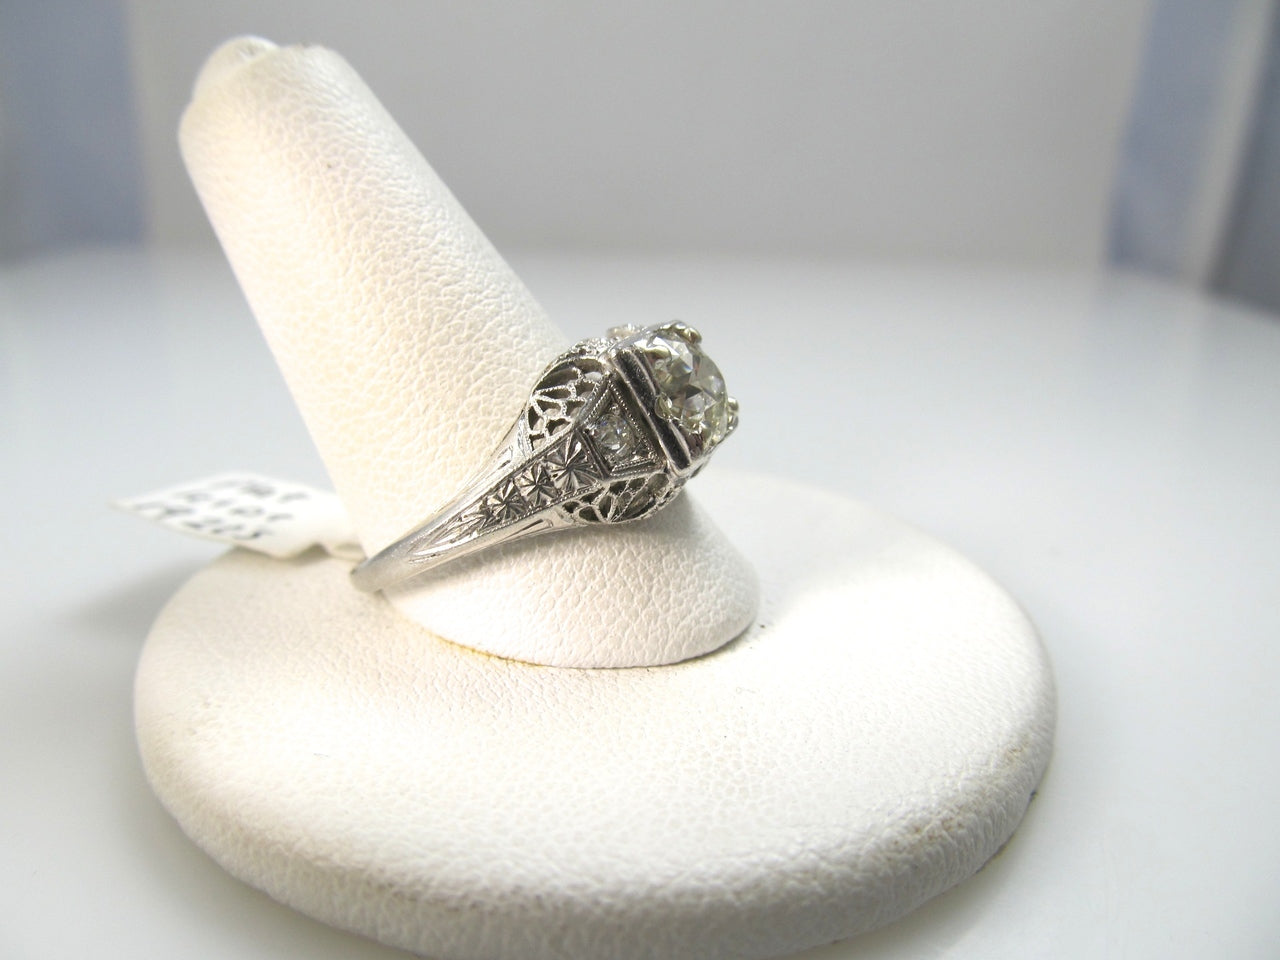 Antique Platinum Filigree Ring With A 1ct Center Diamond, Circa 1920